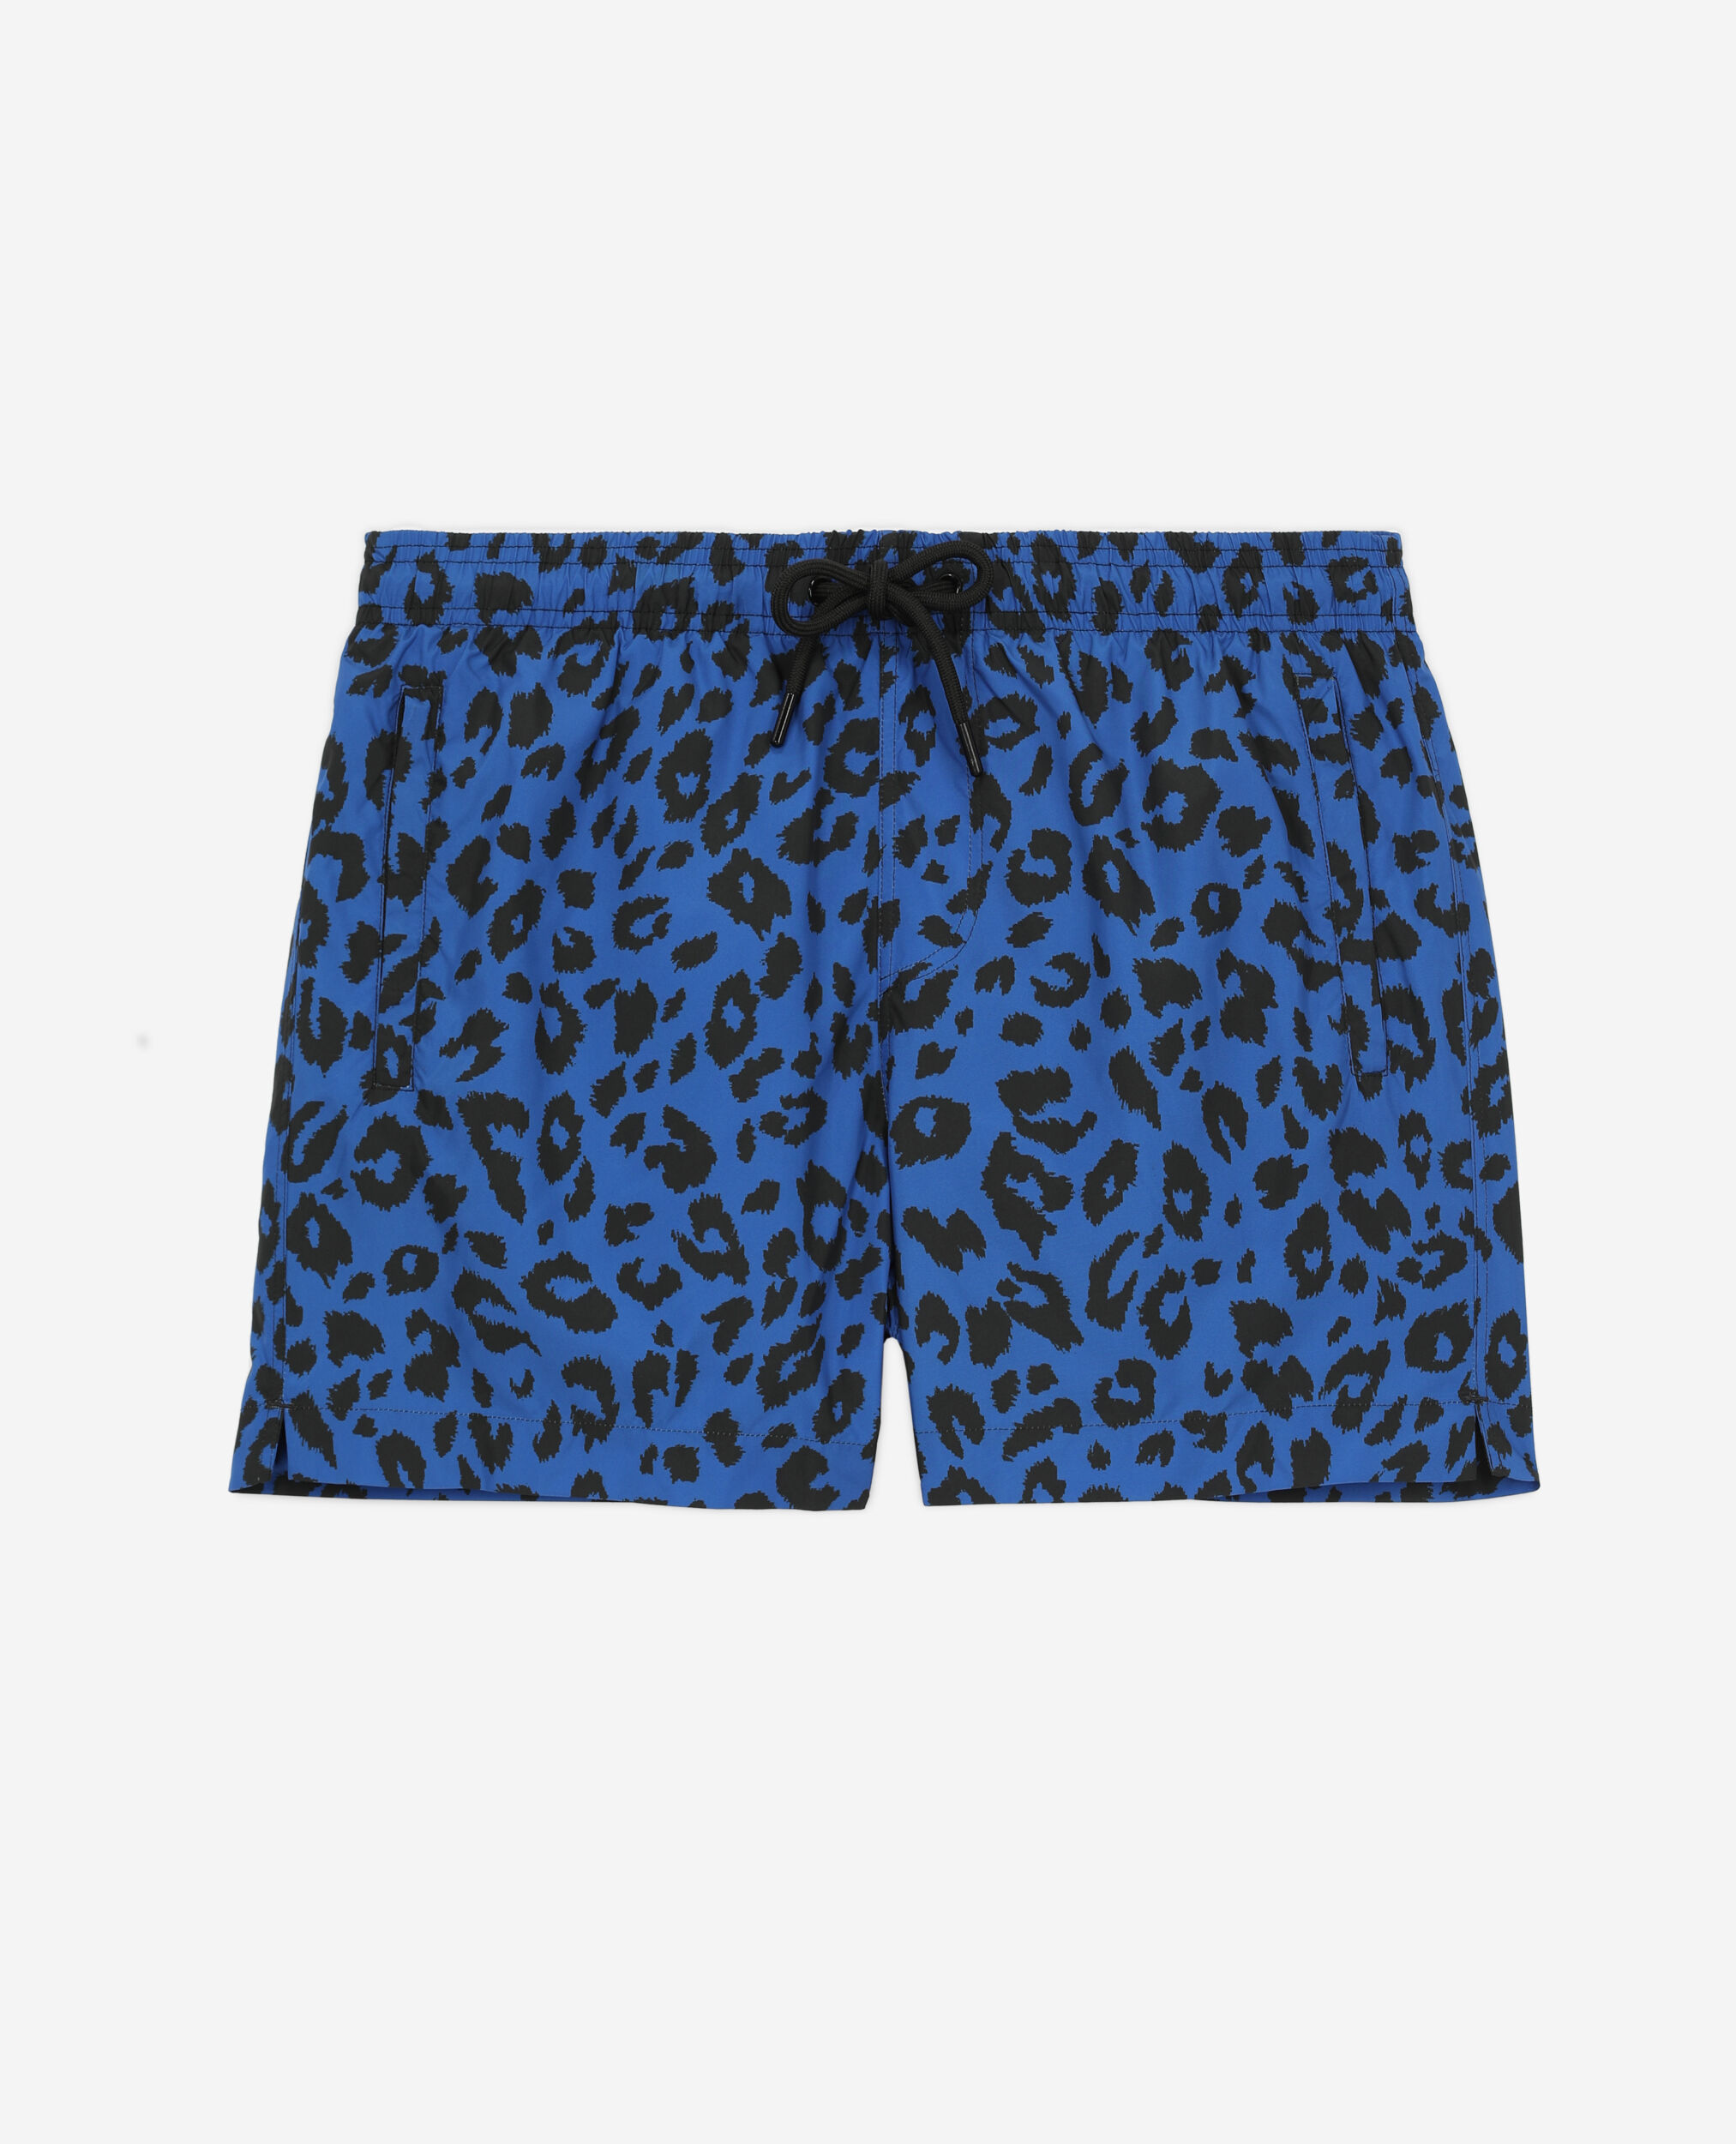 Blauer Badeanzug mit Leopardenmotiv, BLUE ELECTRIC, hi-res image number null